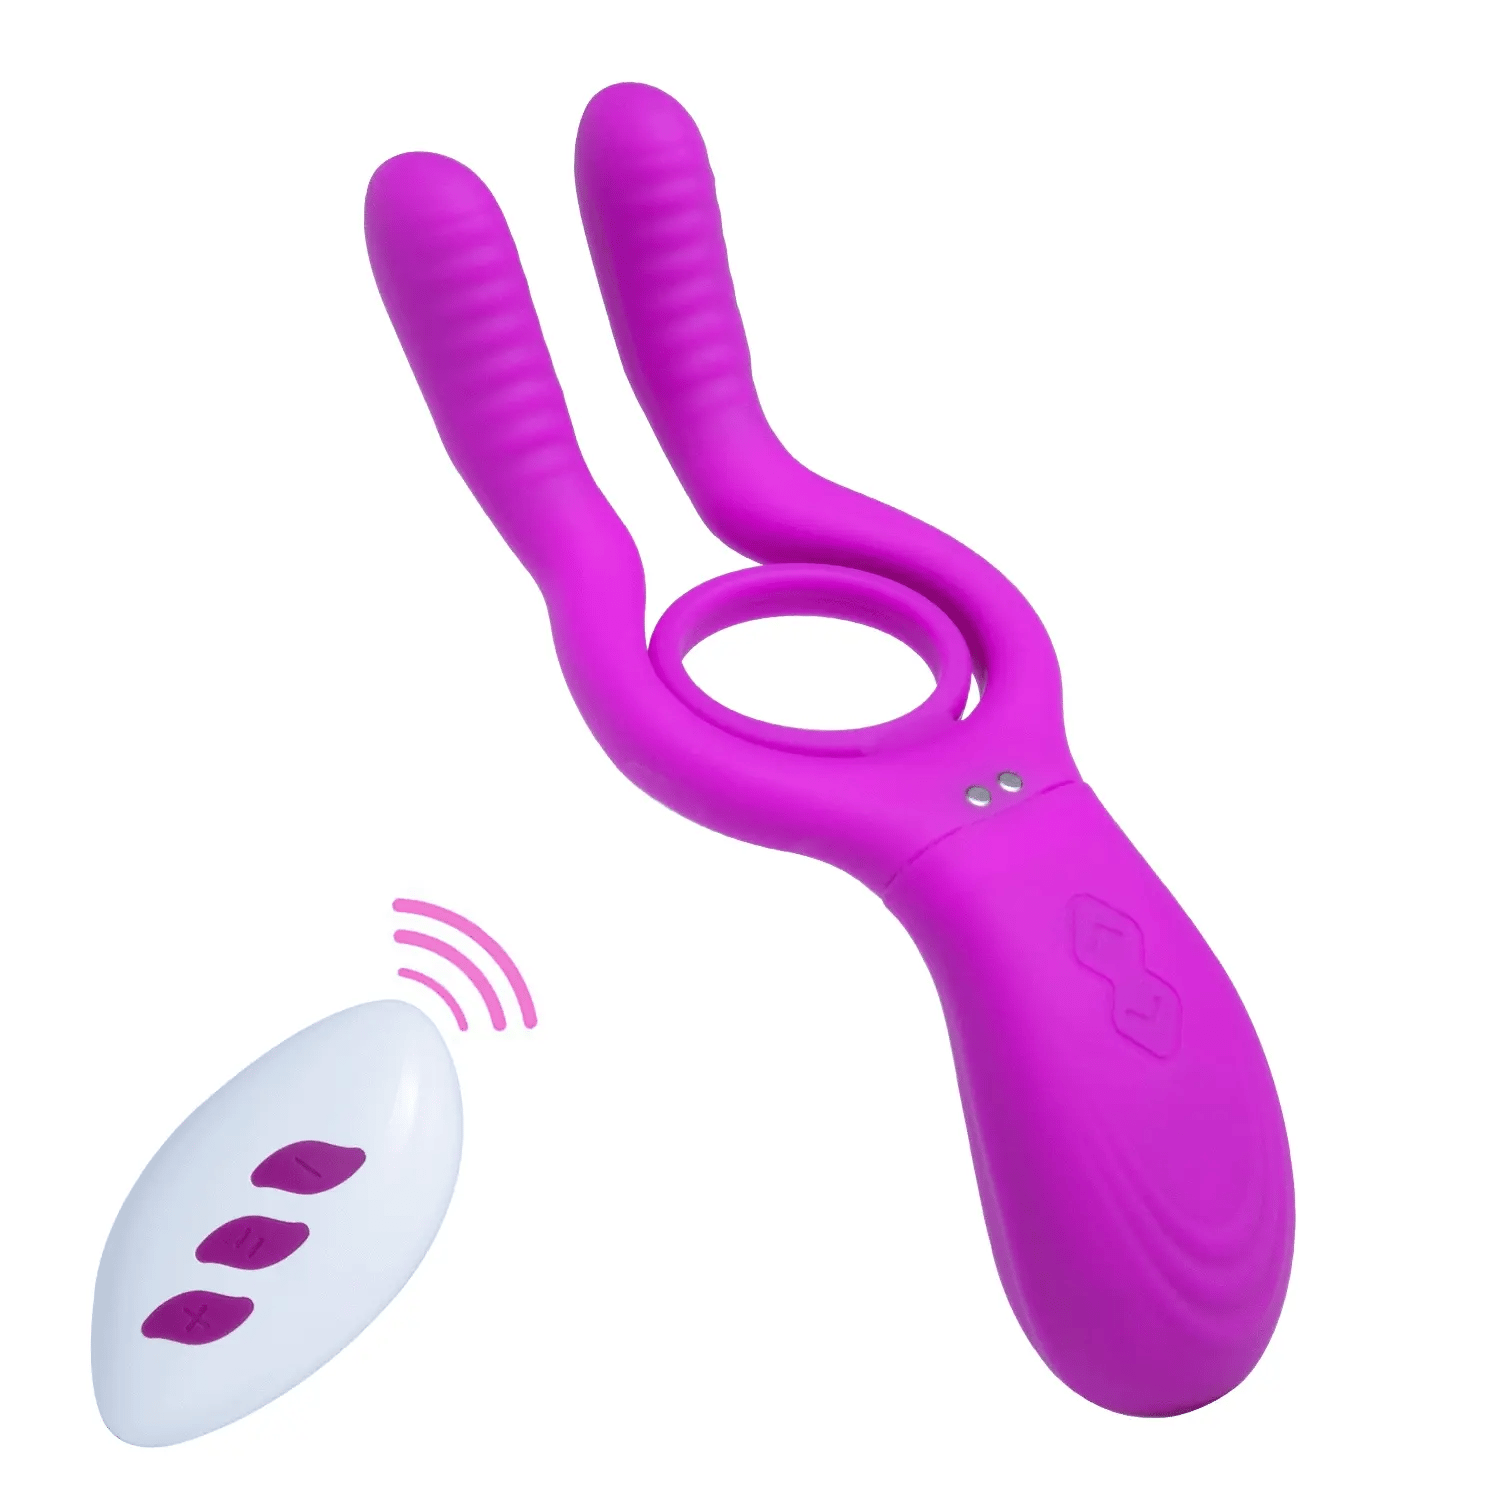 Casey - Remote Control Testicle Clit Vibrator & Cock Ring